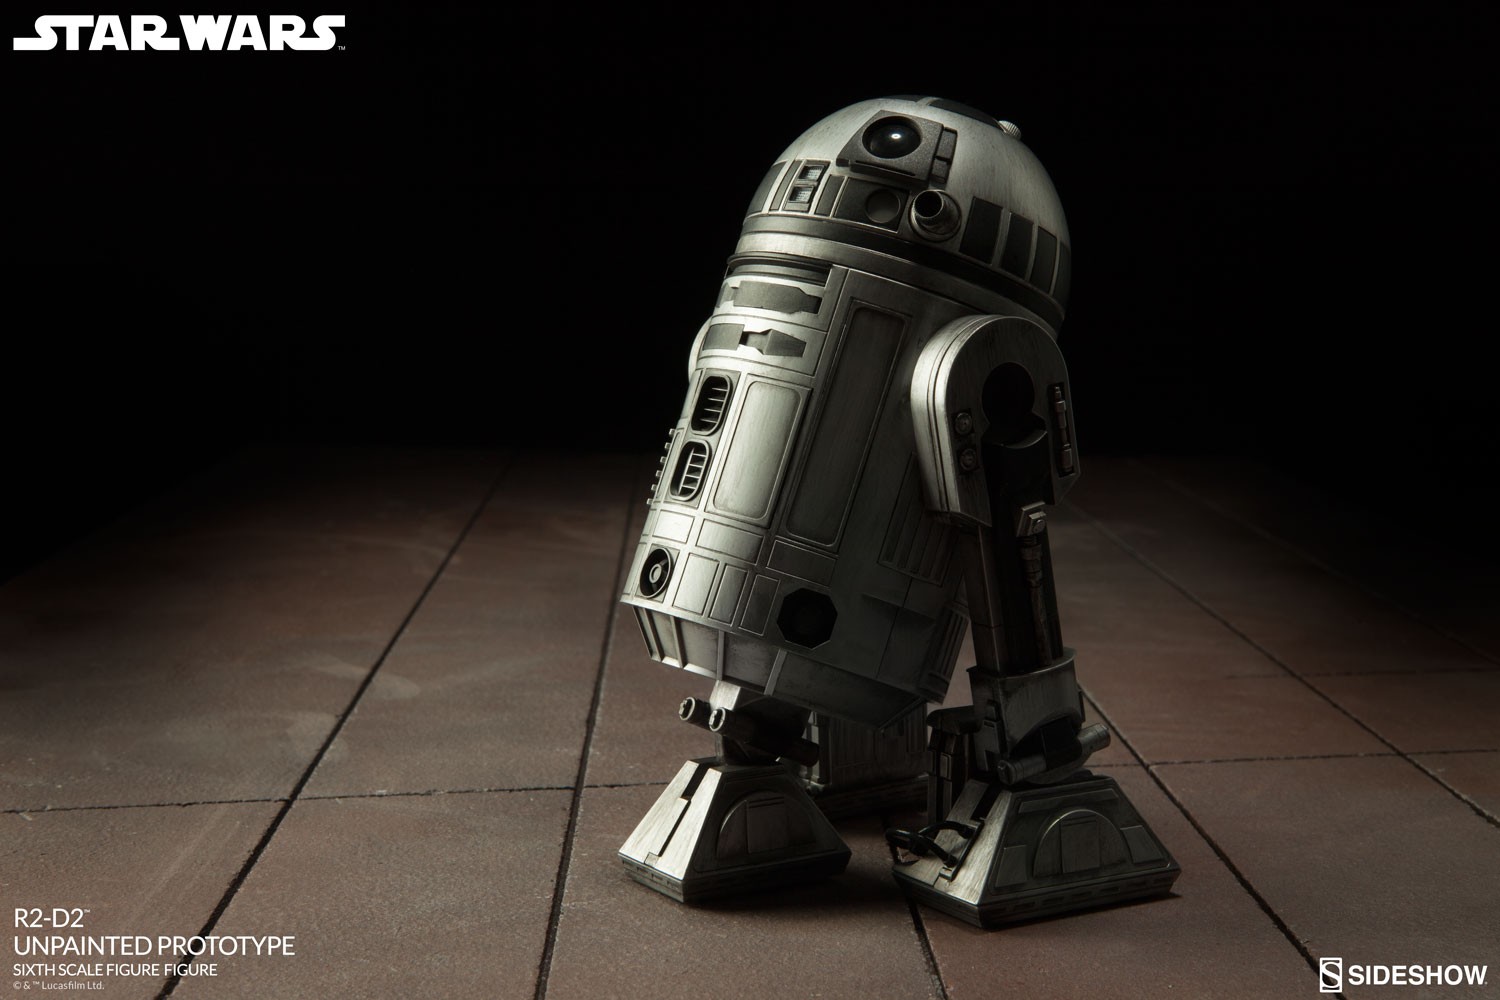 R2-D2 Unpainted Prototype Exclusive Edition (Prototype Shown) View 3